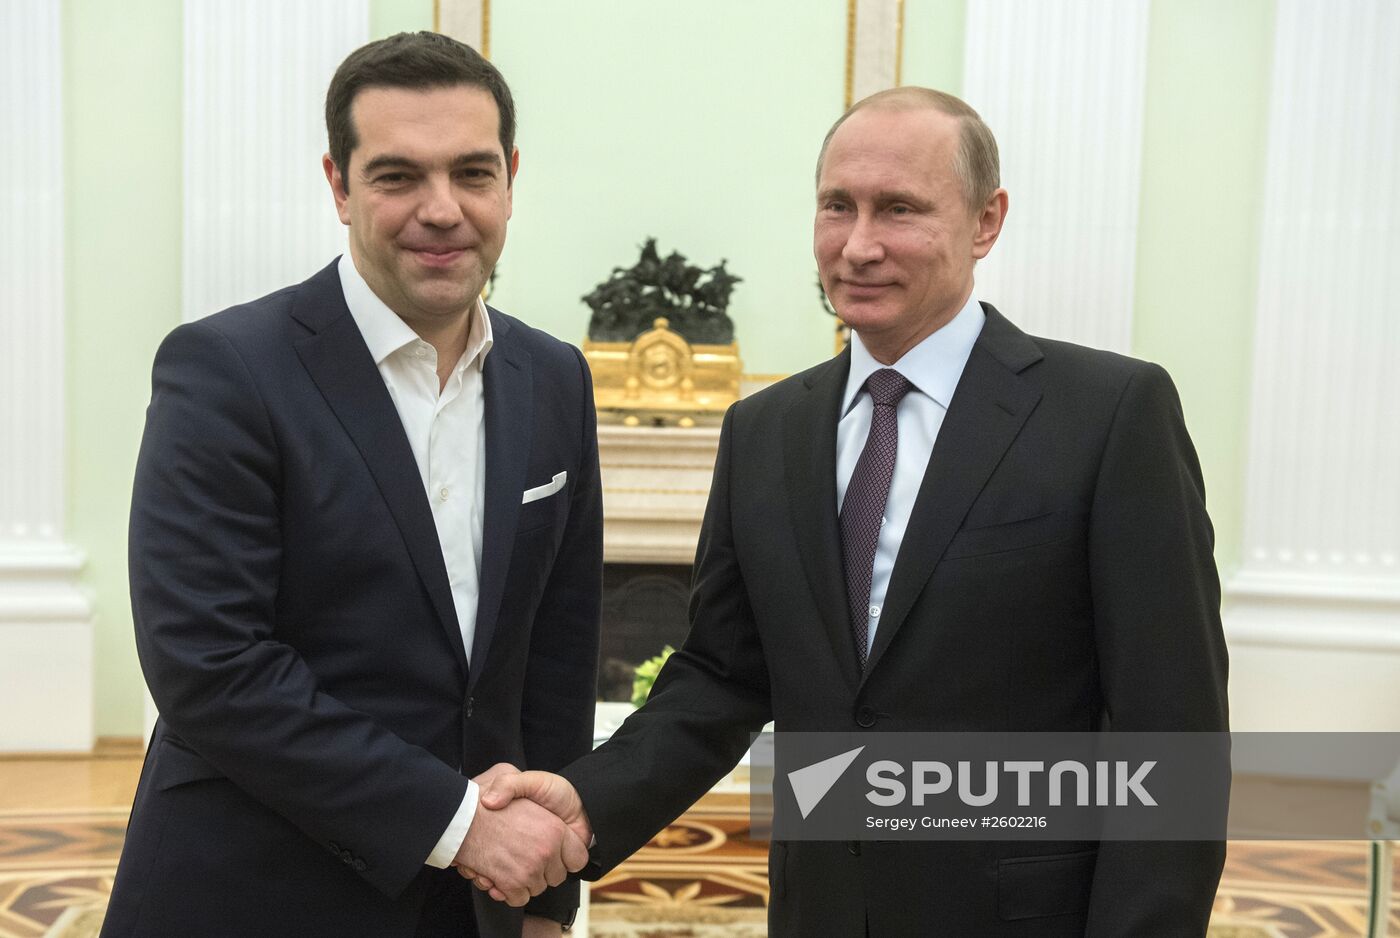 Russian President Vladimir Putin's meeting with Greek Prime Minister Alexis Tsipras